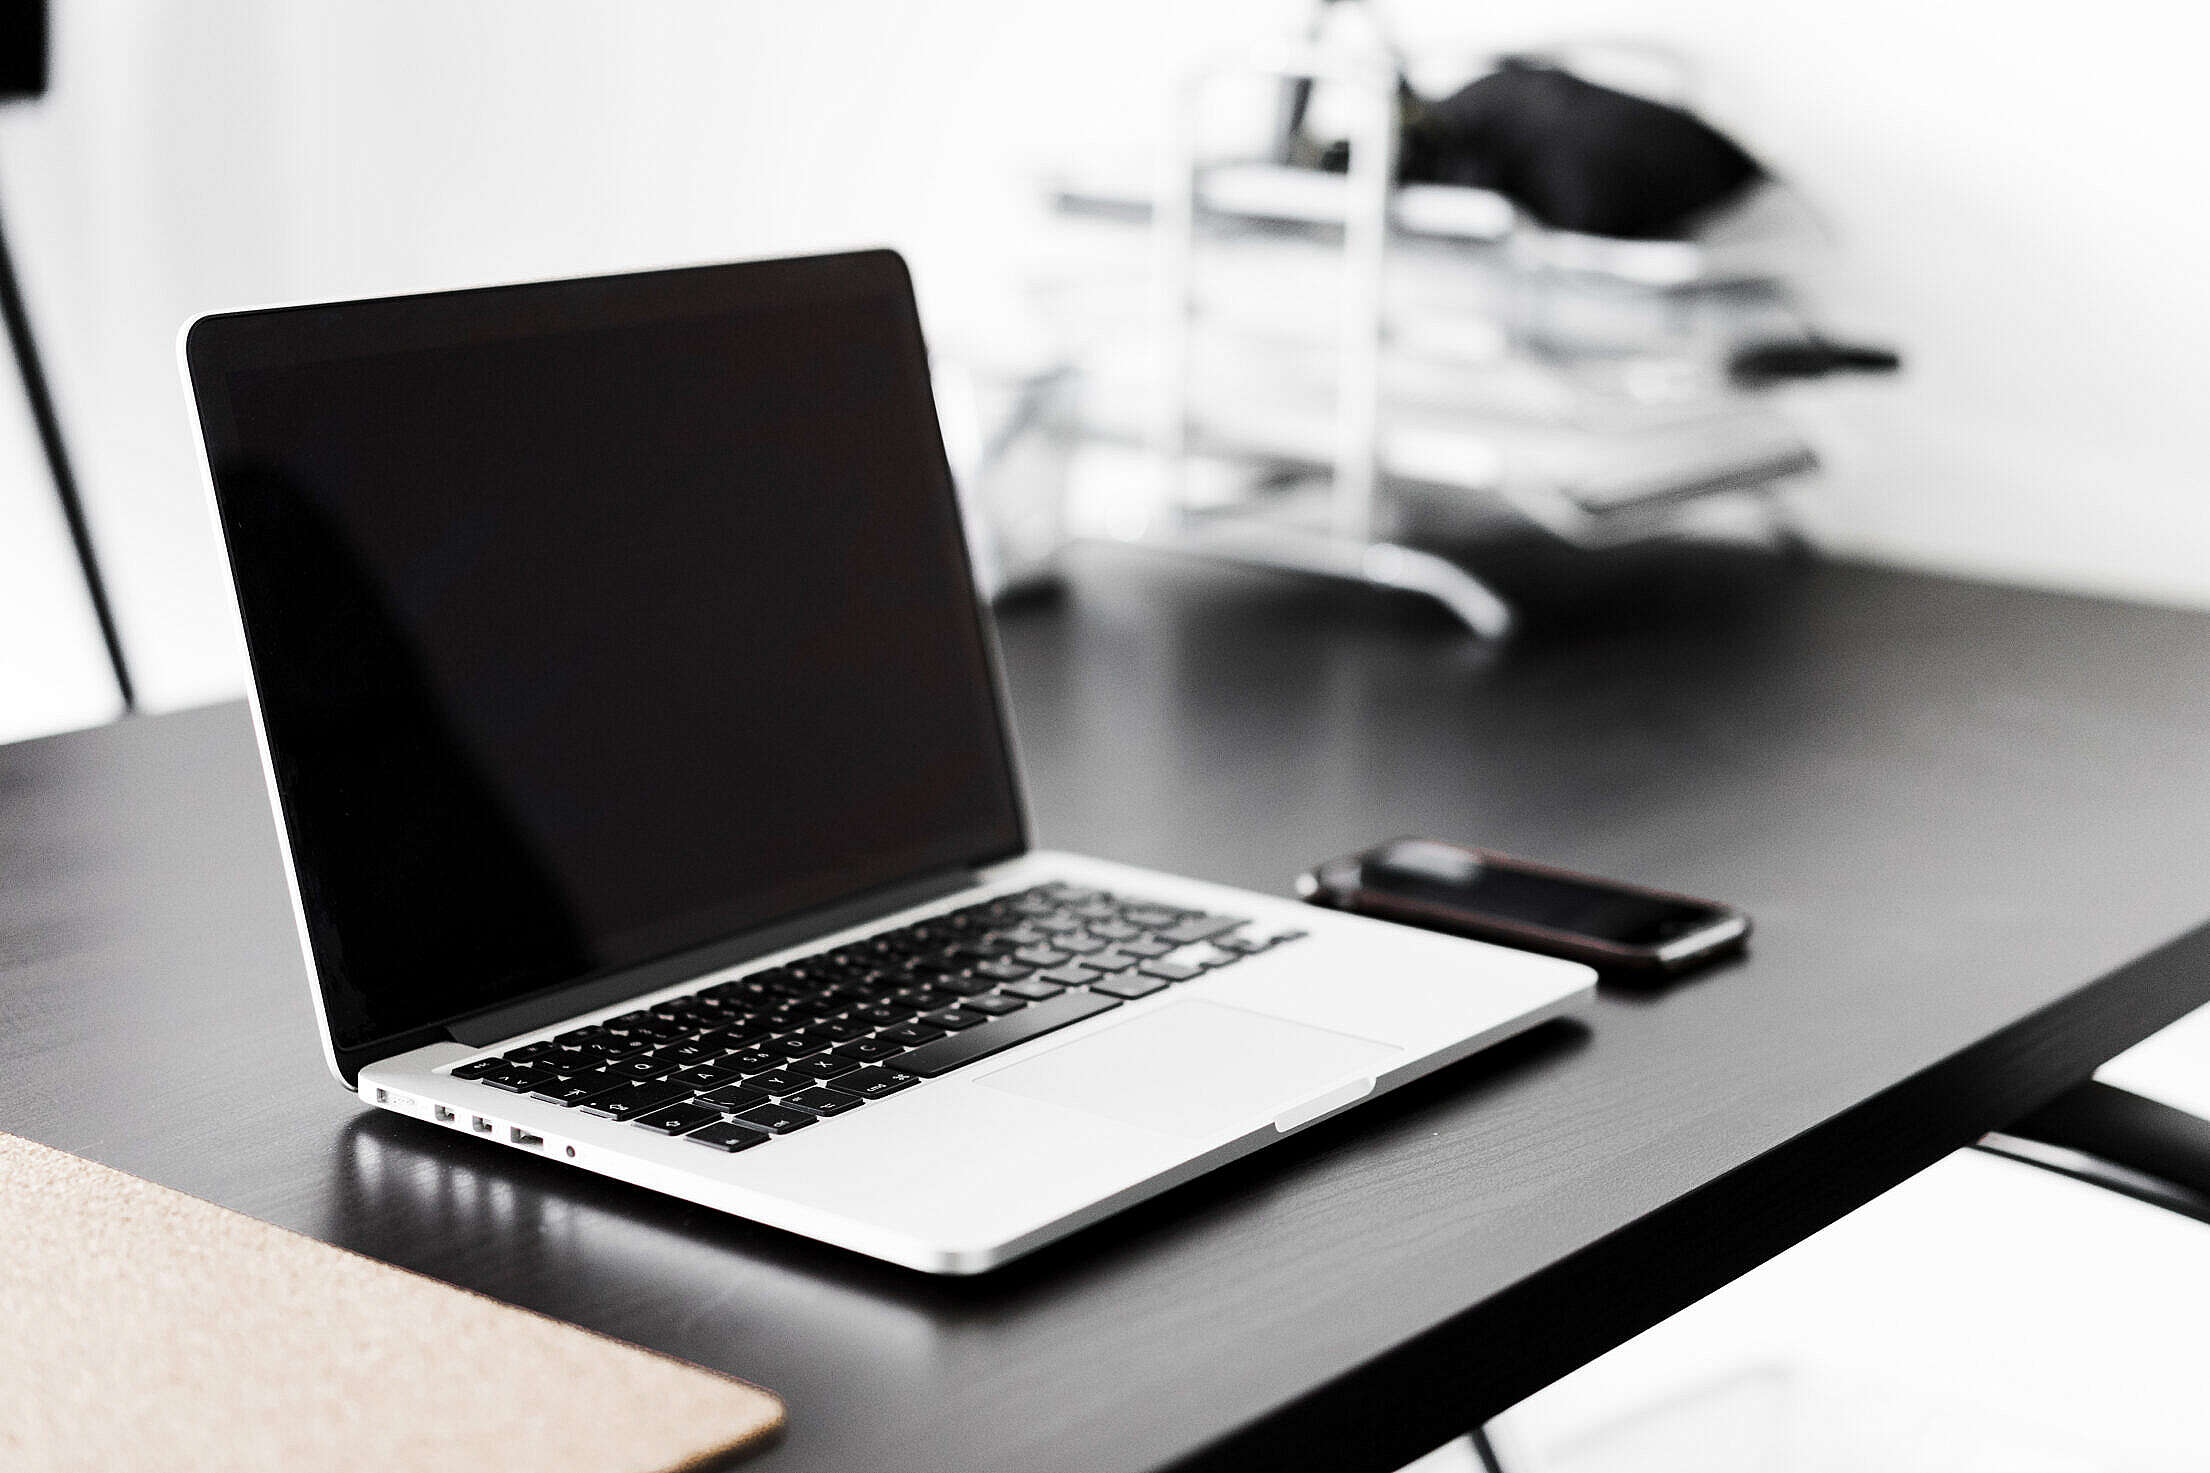 Modern Laptop and Smartphone on Black Desk Free Stock Photo